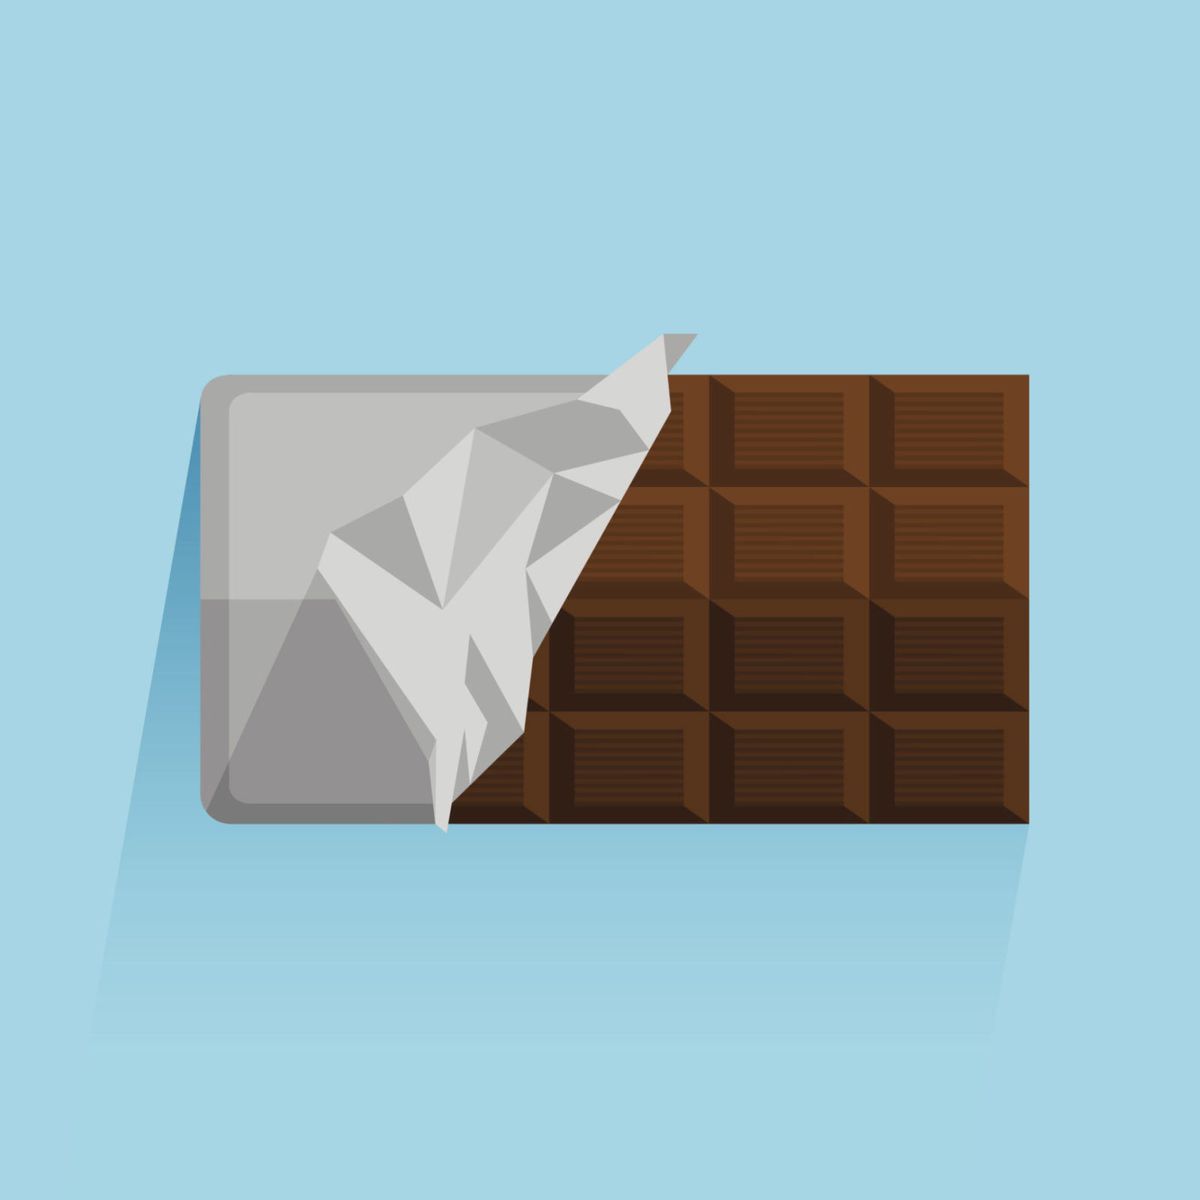 Dark Chocolate Not Really Dark Chocolate - What's Really in Your Dark Chocolate